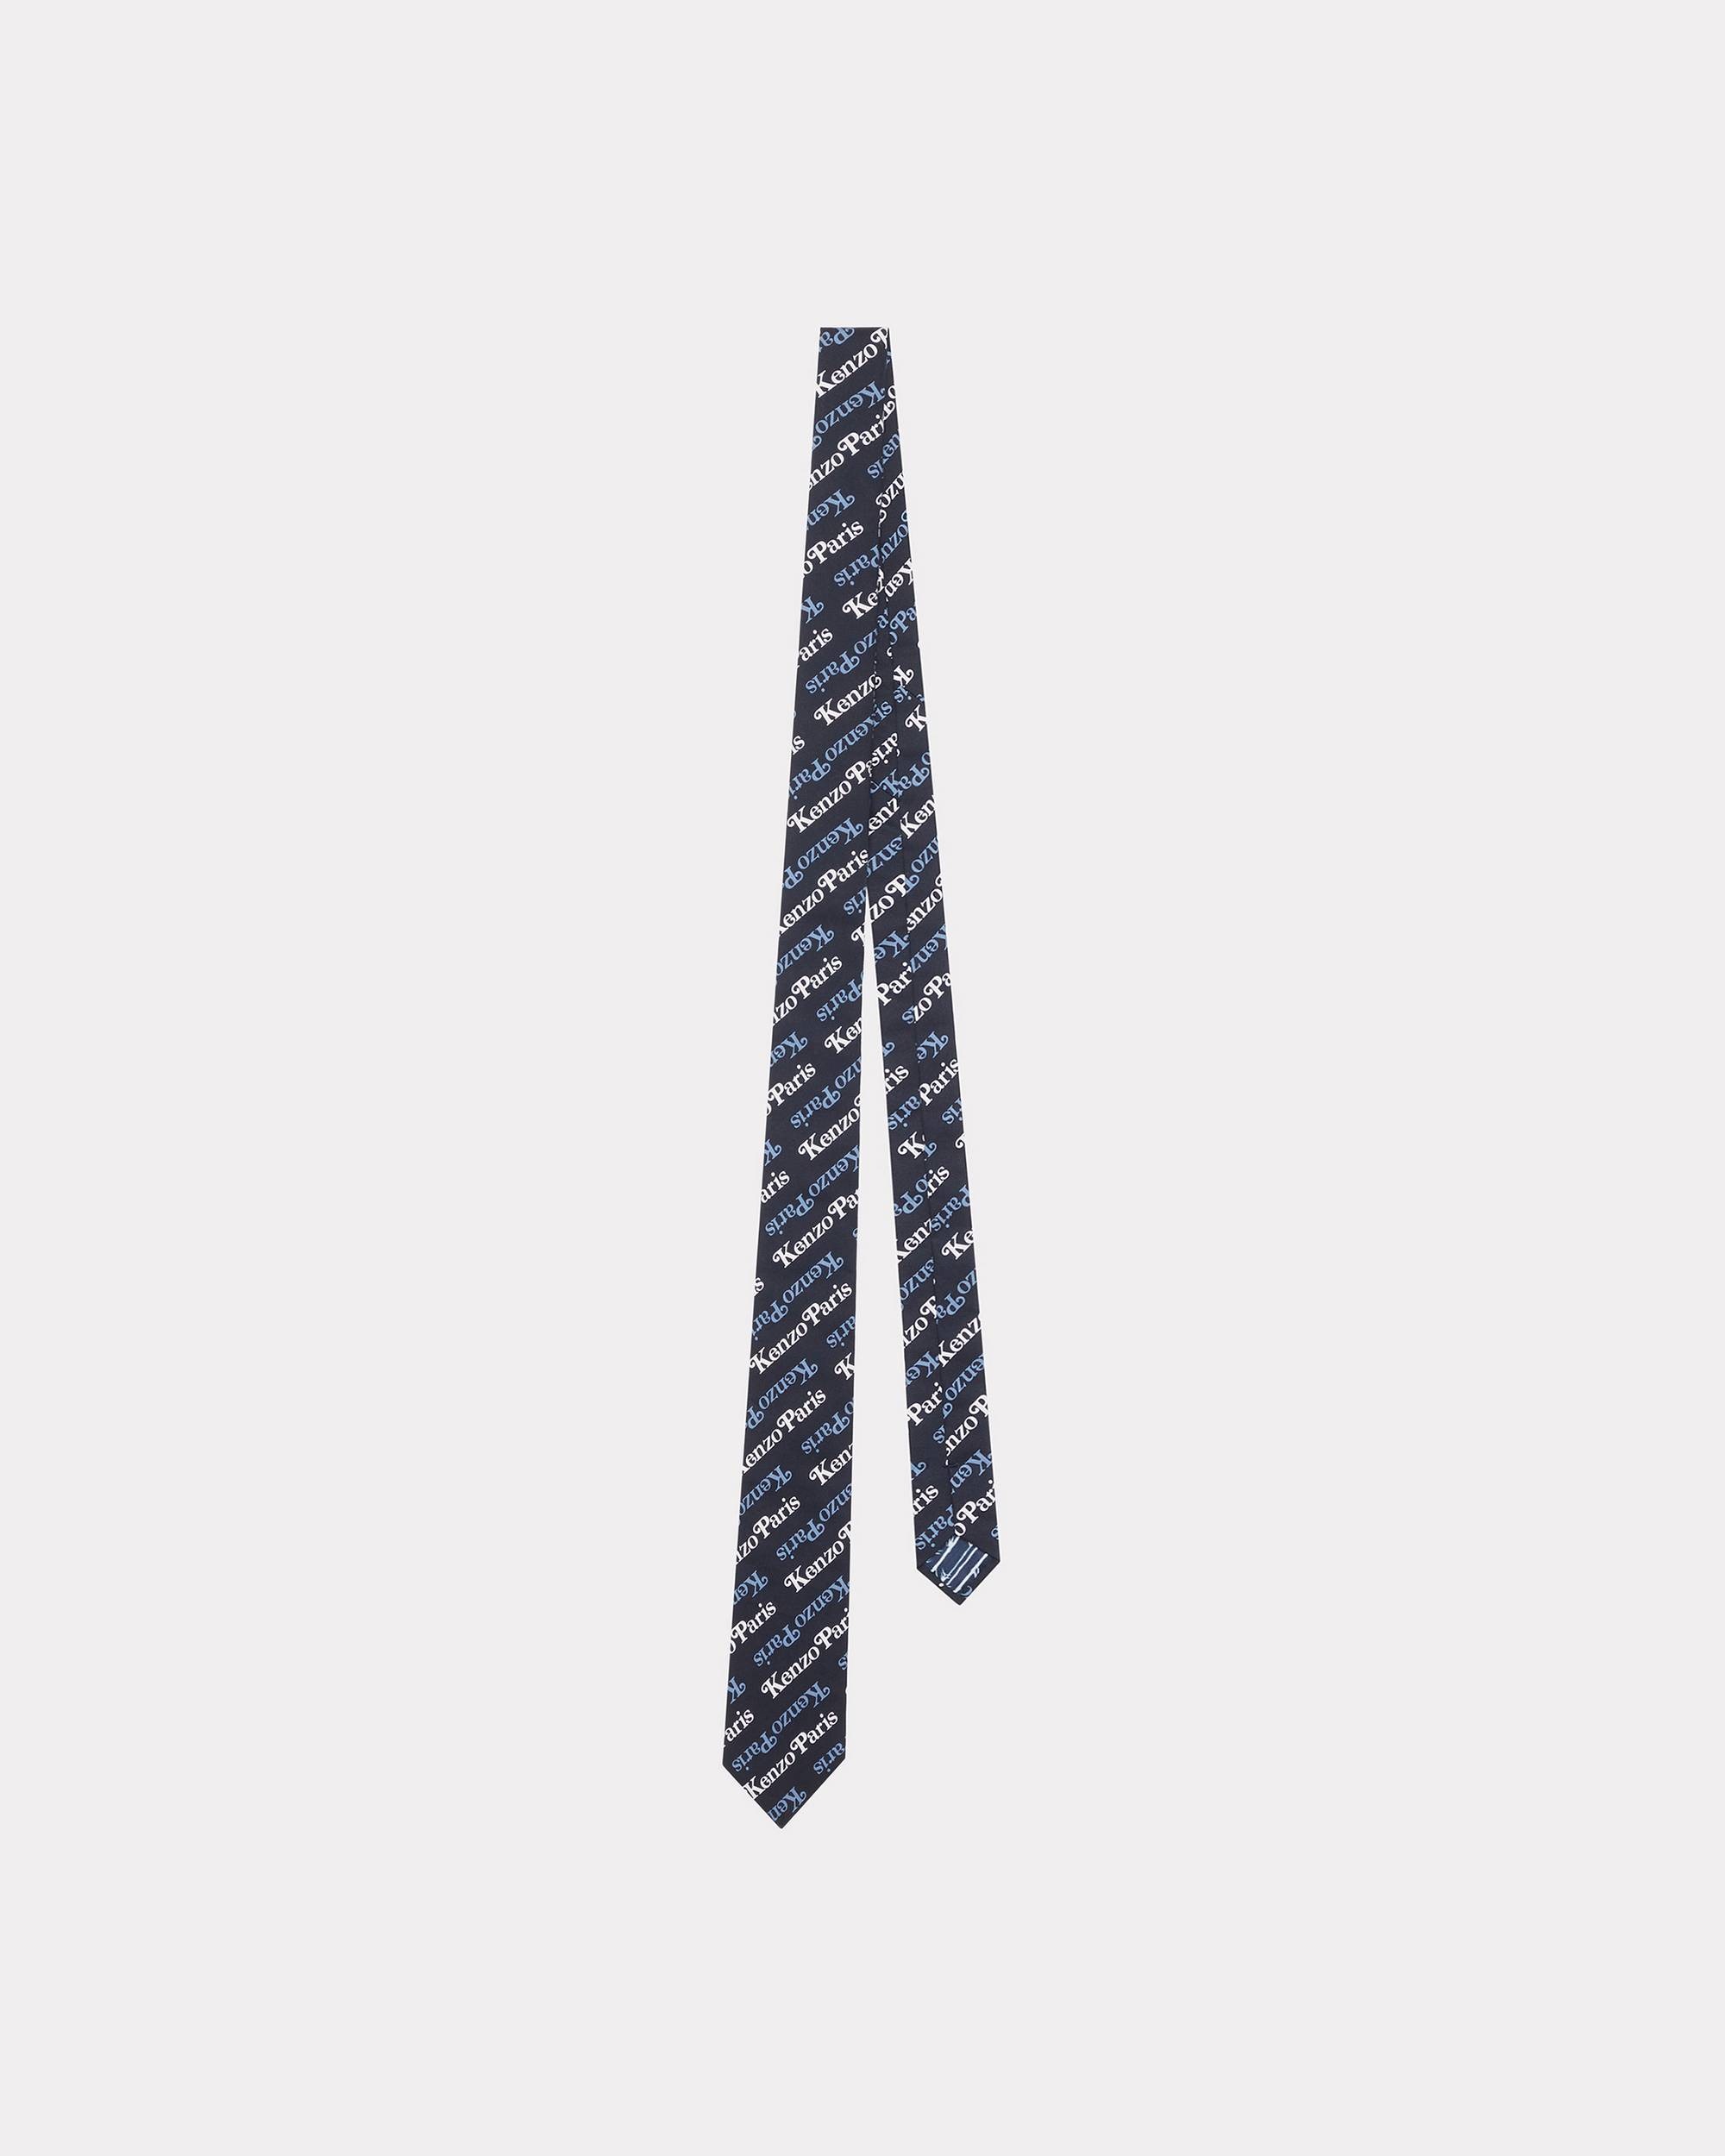 'KENZOGRAM' cotton tie - 1